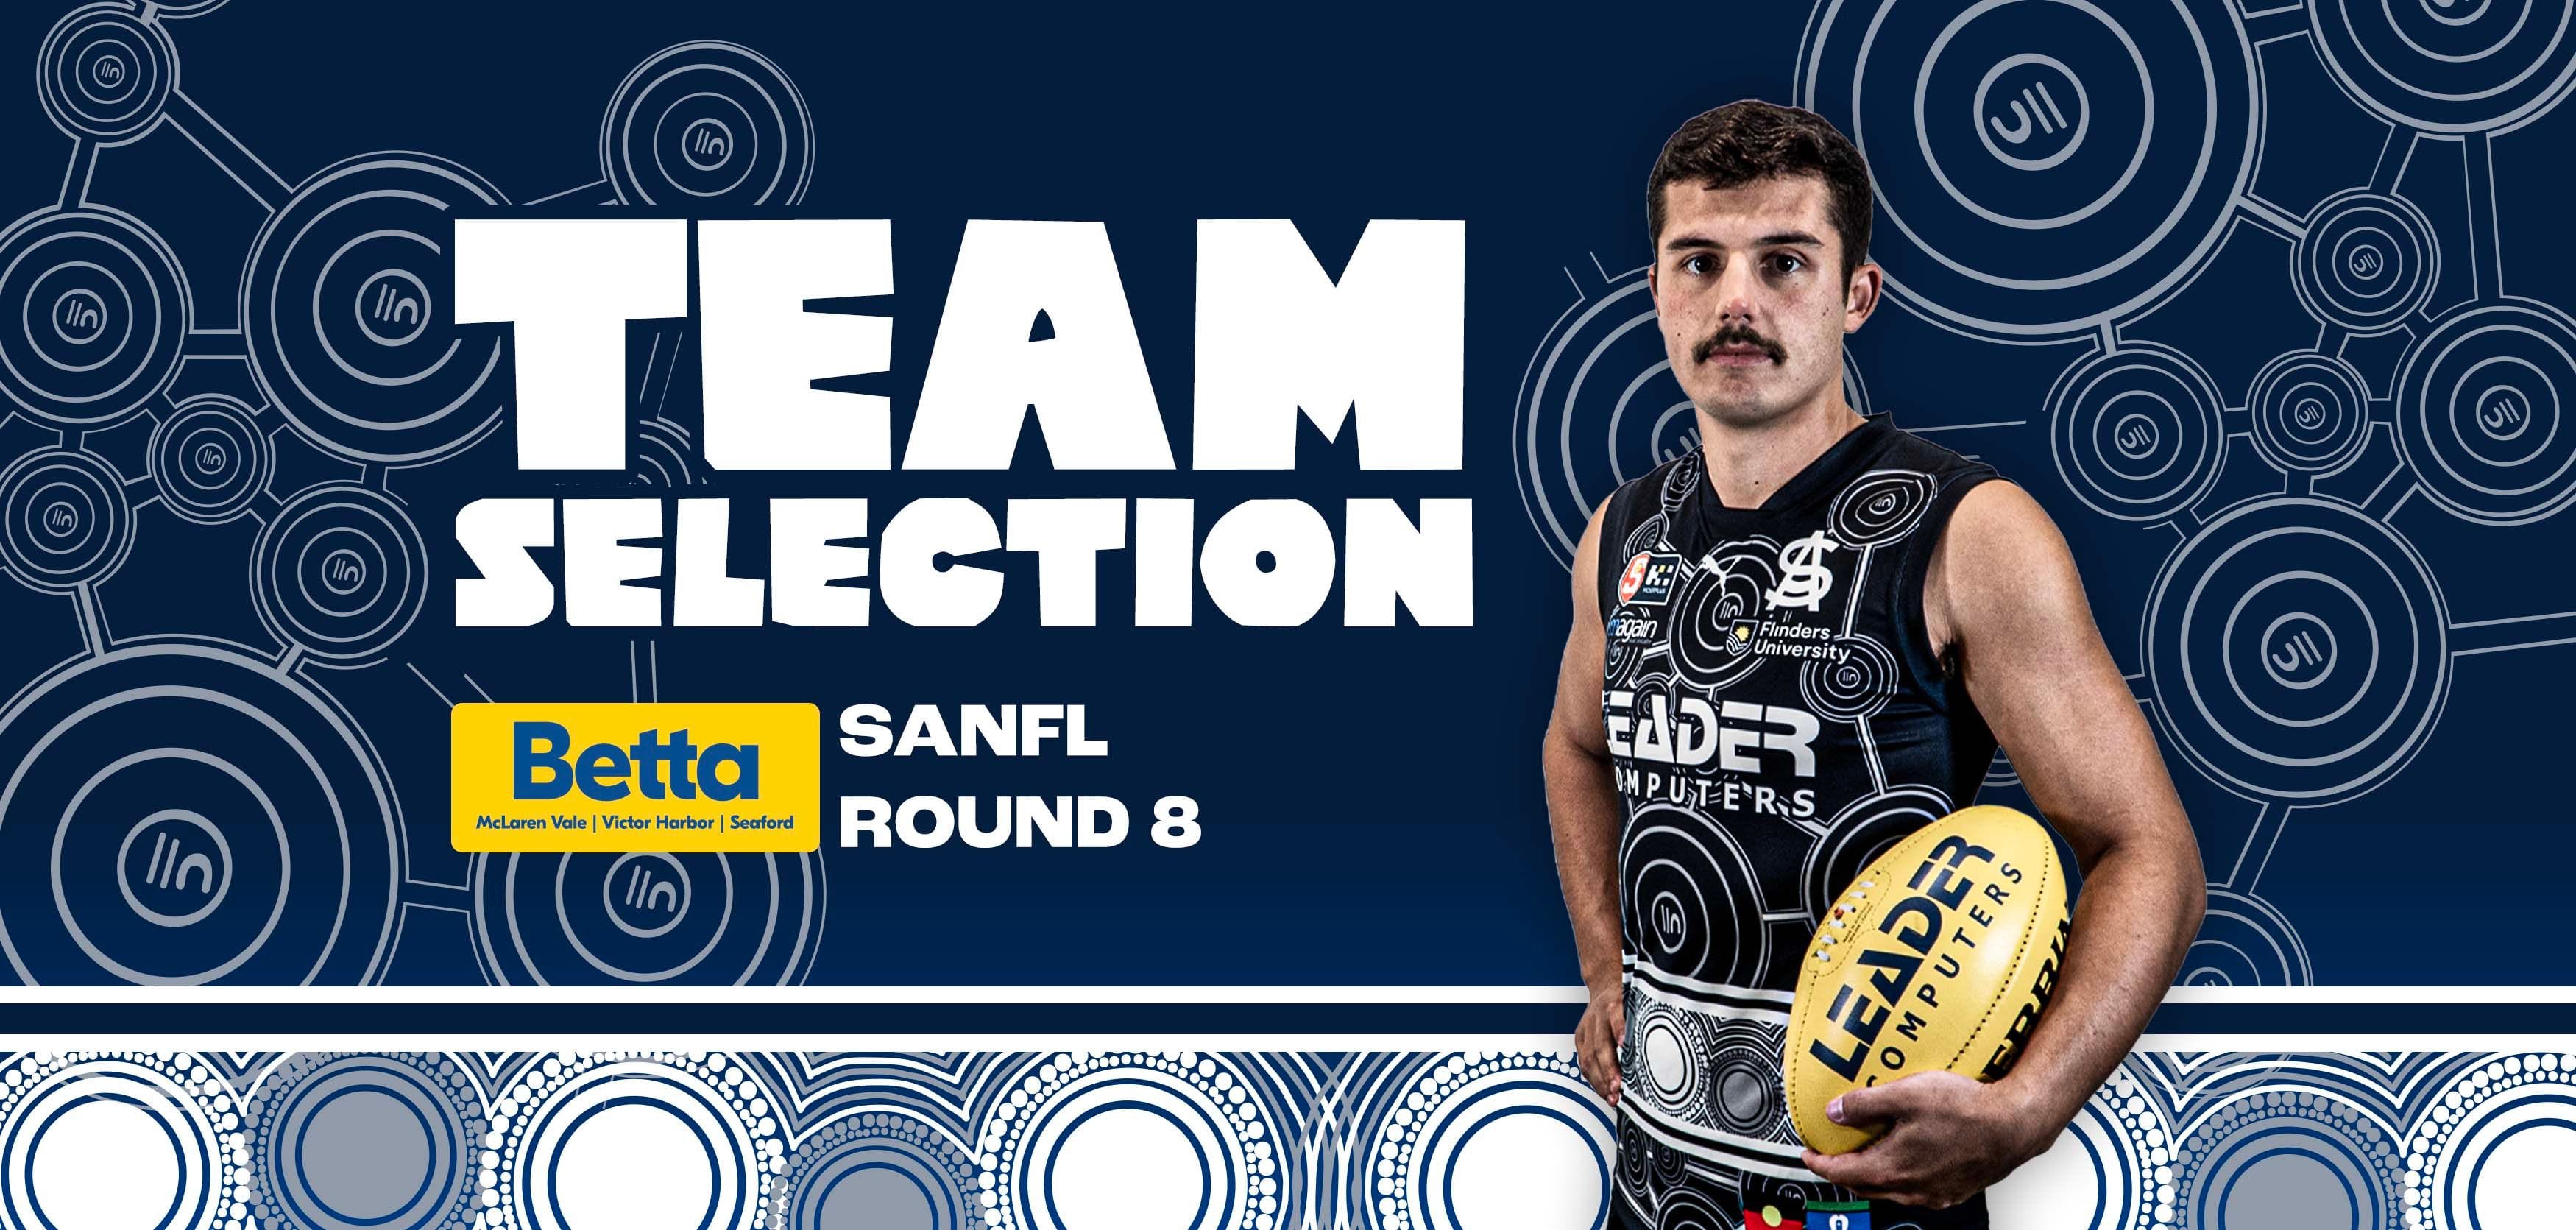 BETTA Team Selection: SANFL Round 8 v North Adelaide